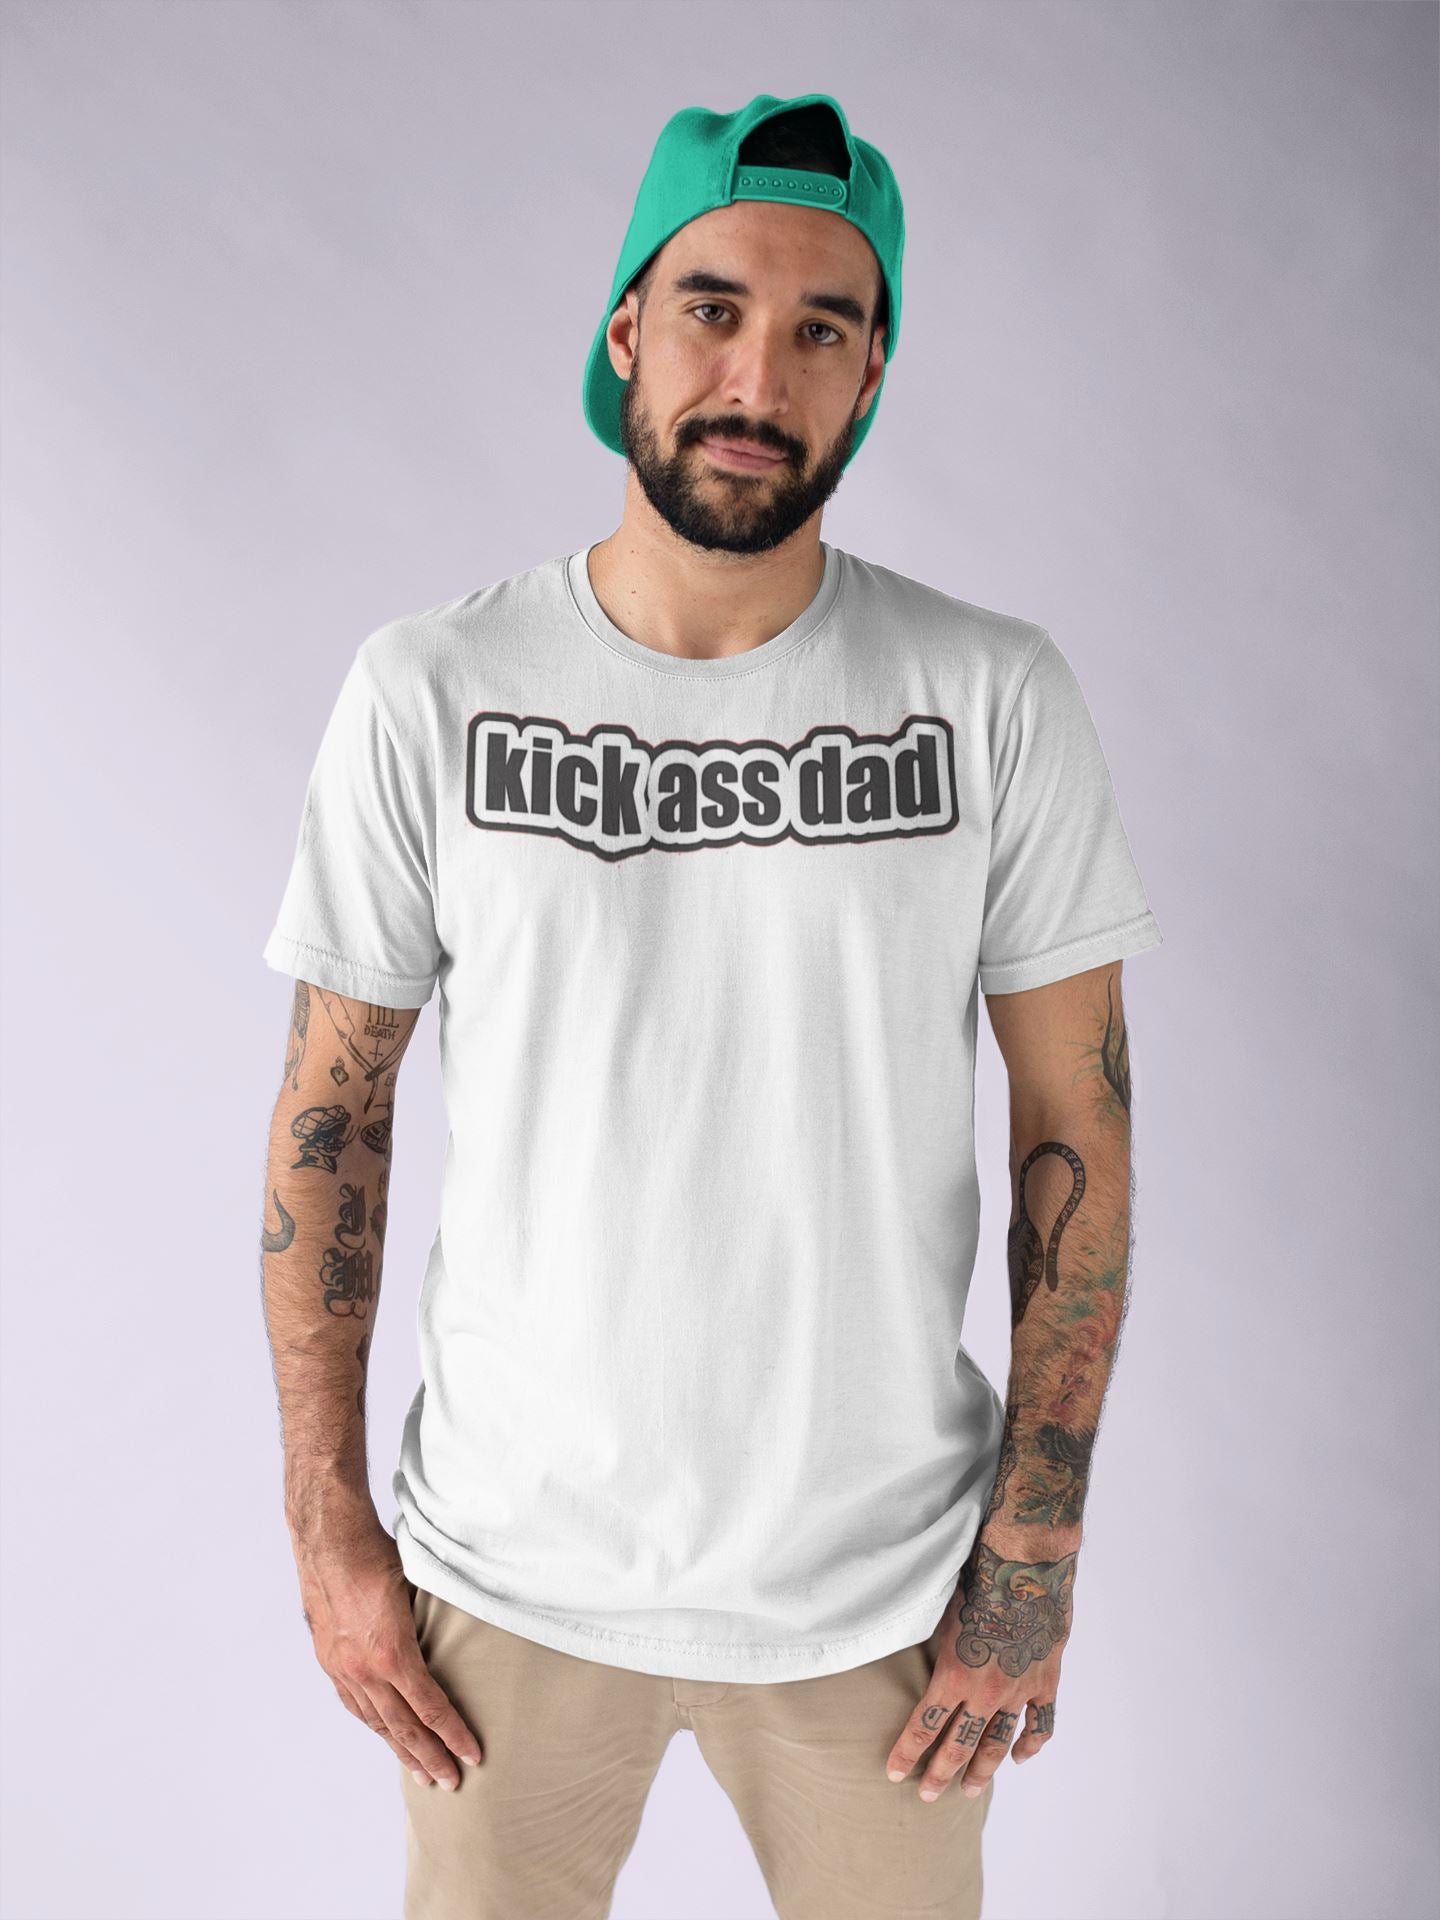 Kick Ass Dad Supreme White T Shirt for Men freeshipping - Catch My Drift India